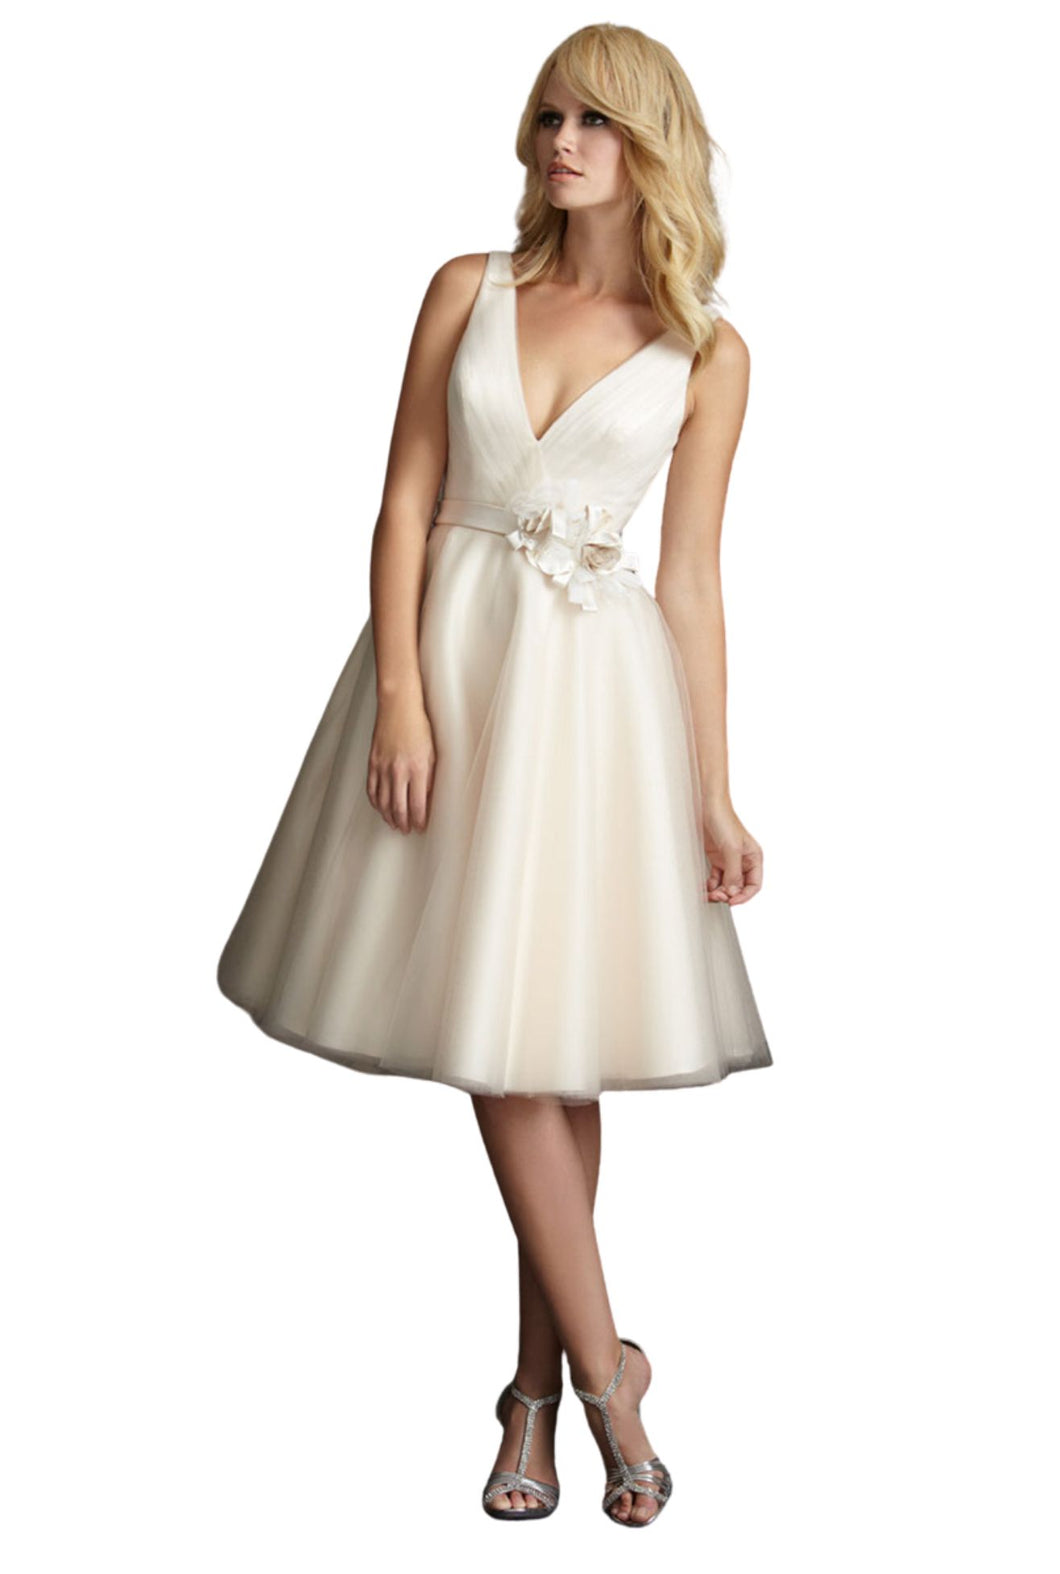 Allure Romance Cream Wedding / Formal Dress, Size 14